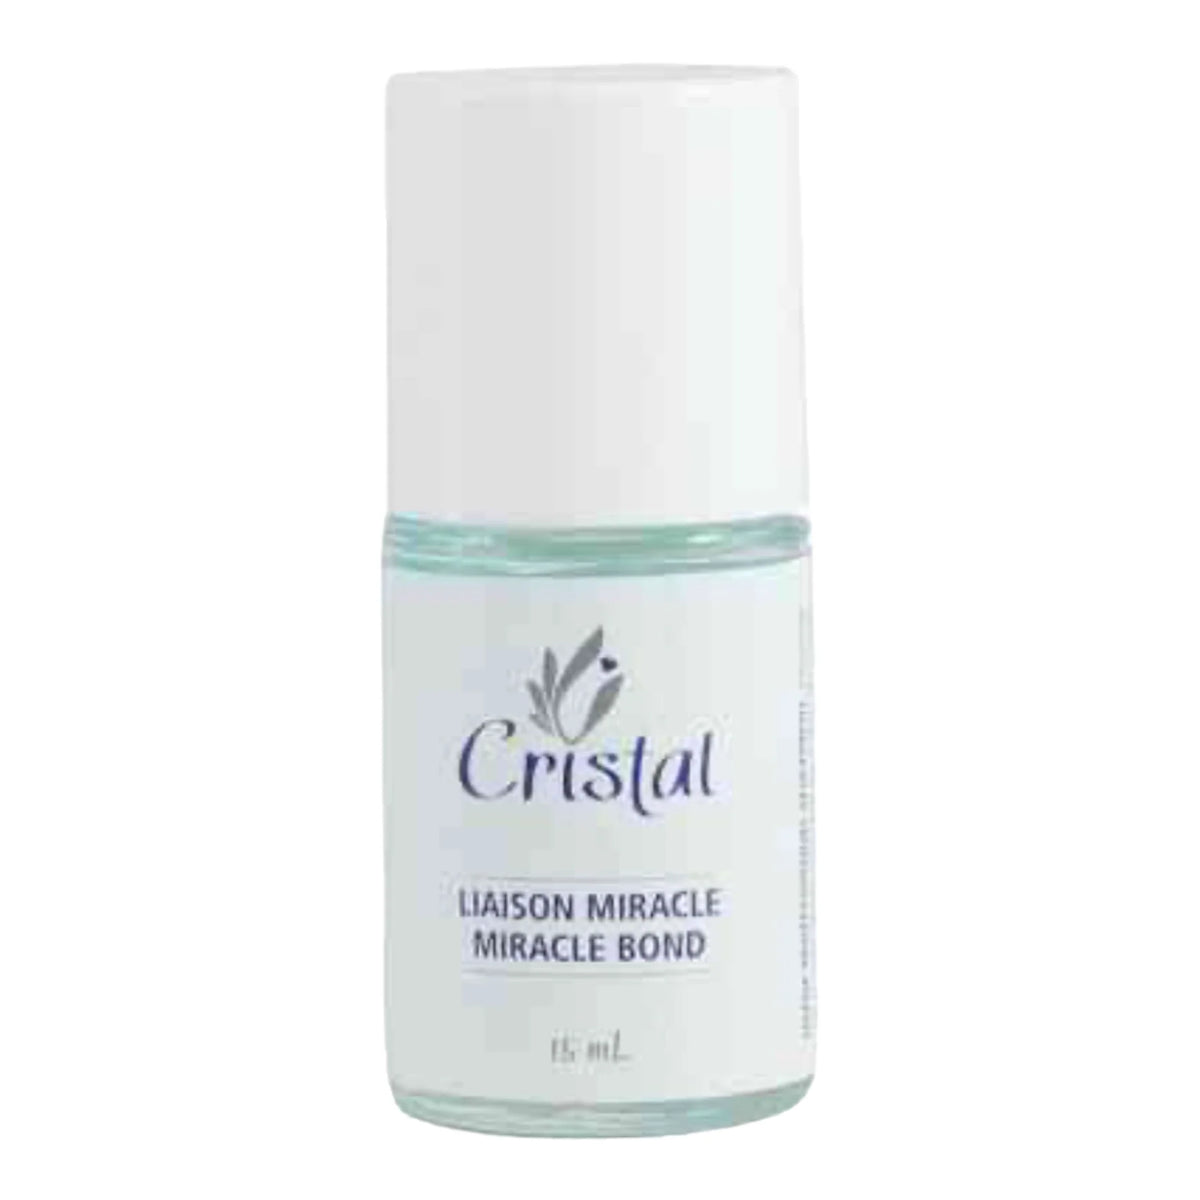 Cristal-Liaison Miracle